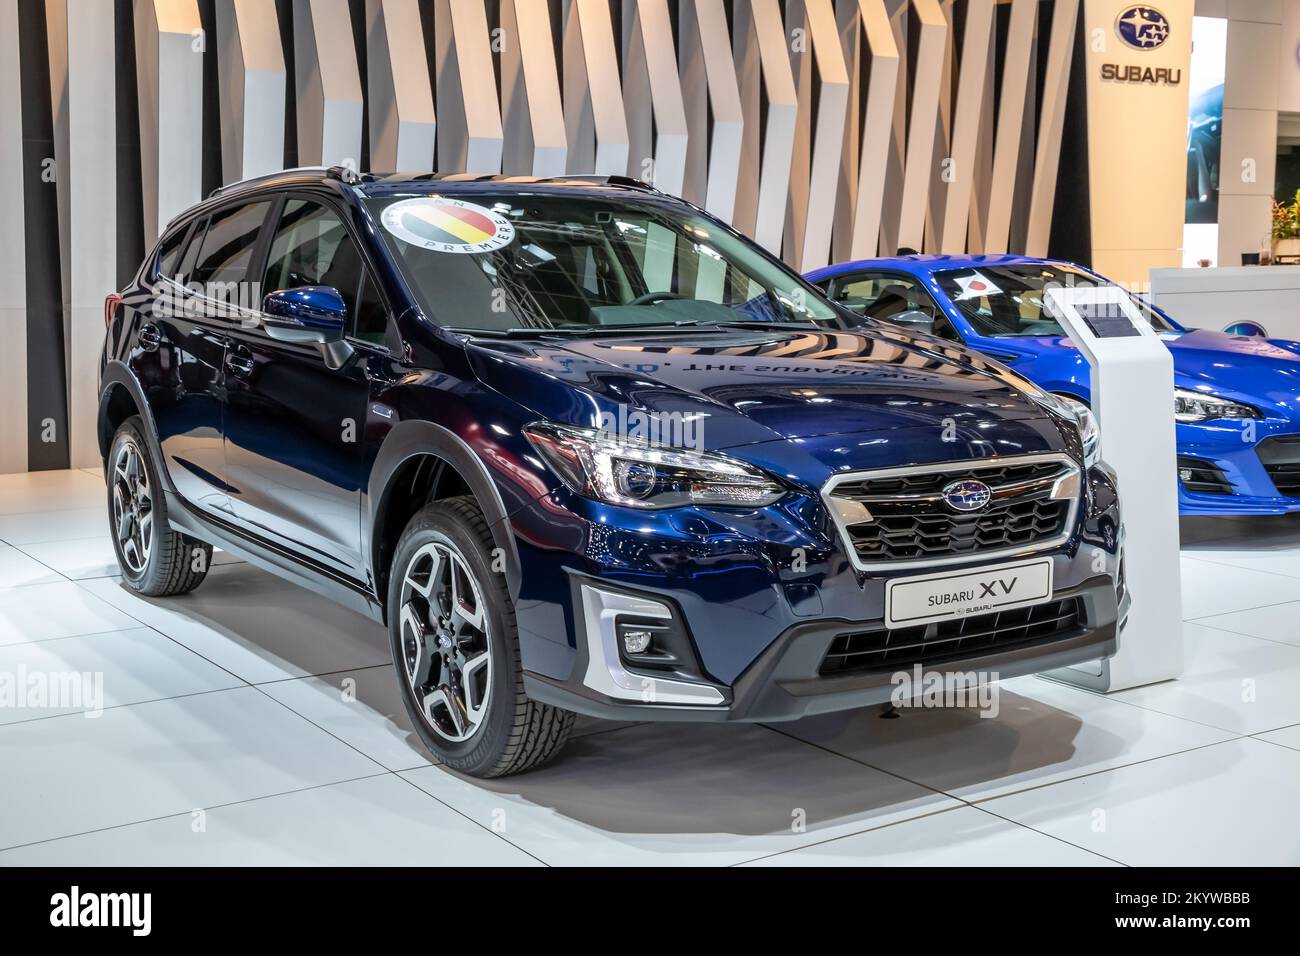 Subaru XV car showcased at the Autosalon Motor Show. Brussels, Belgium - January 9, 2020. Stock Photo